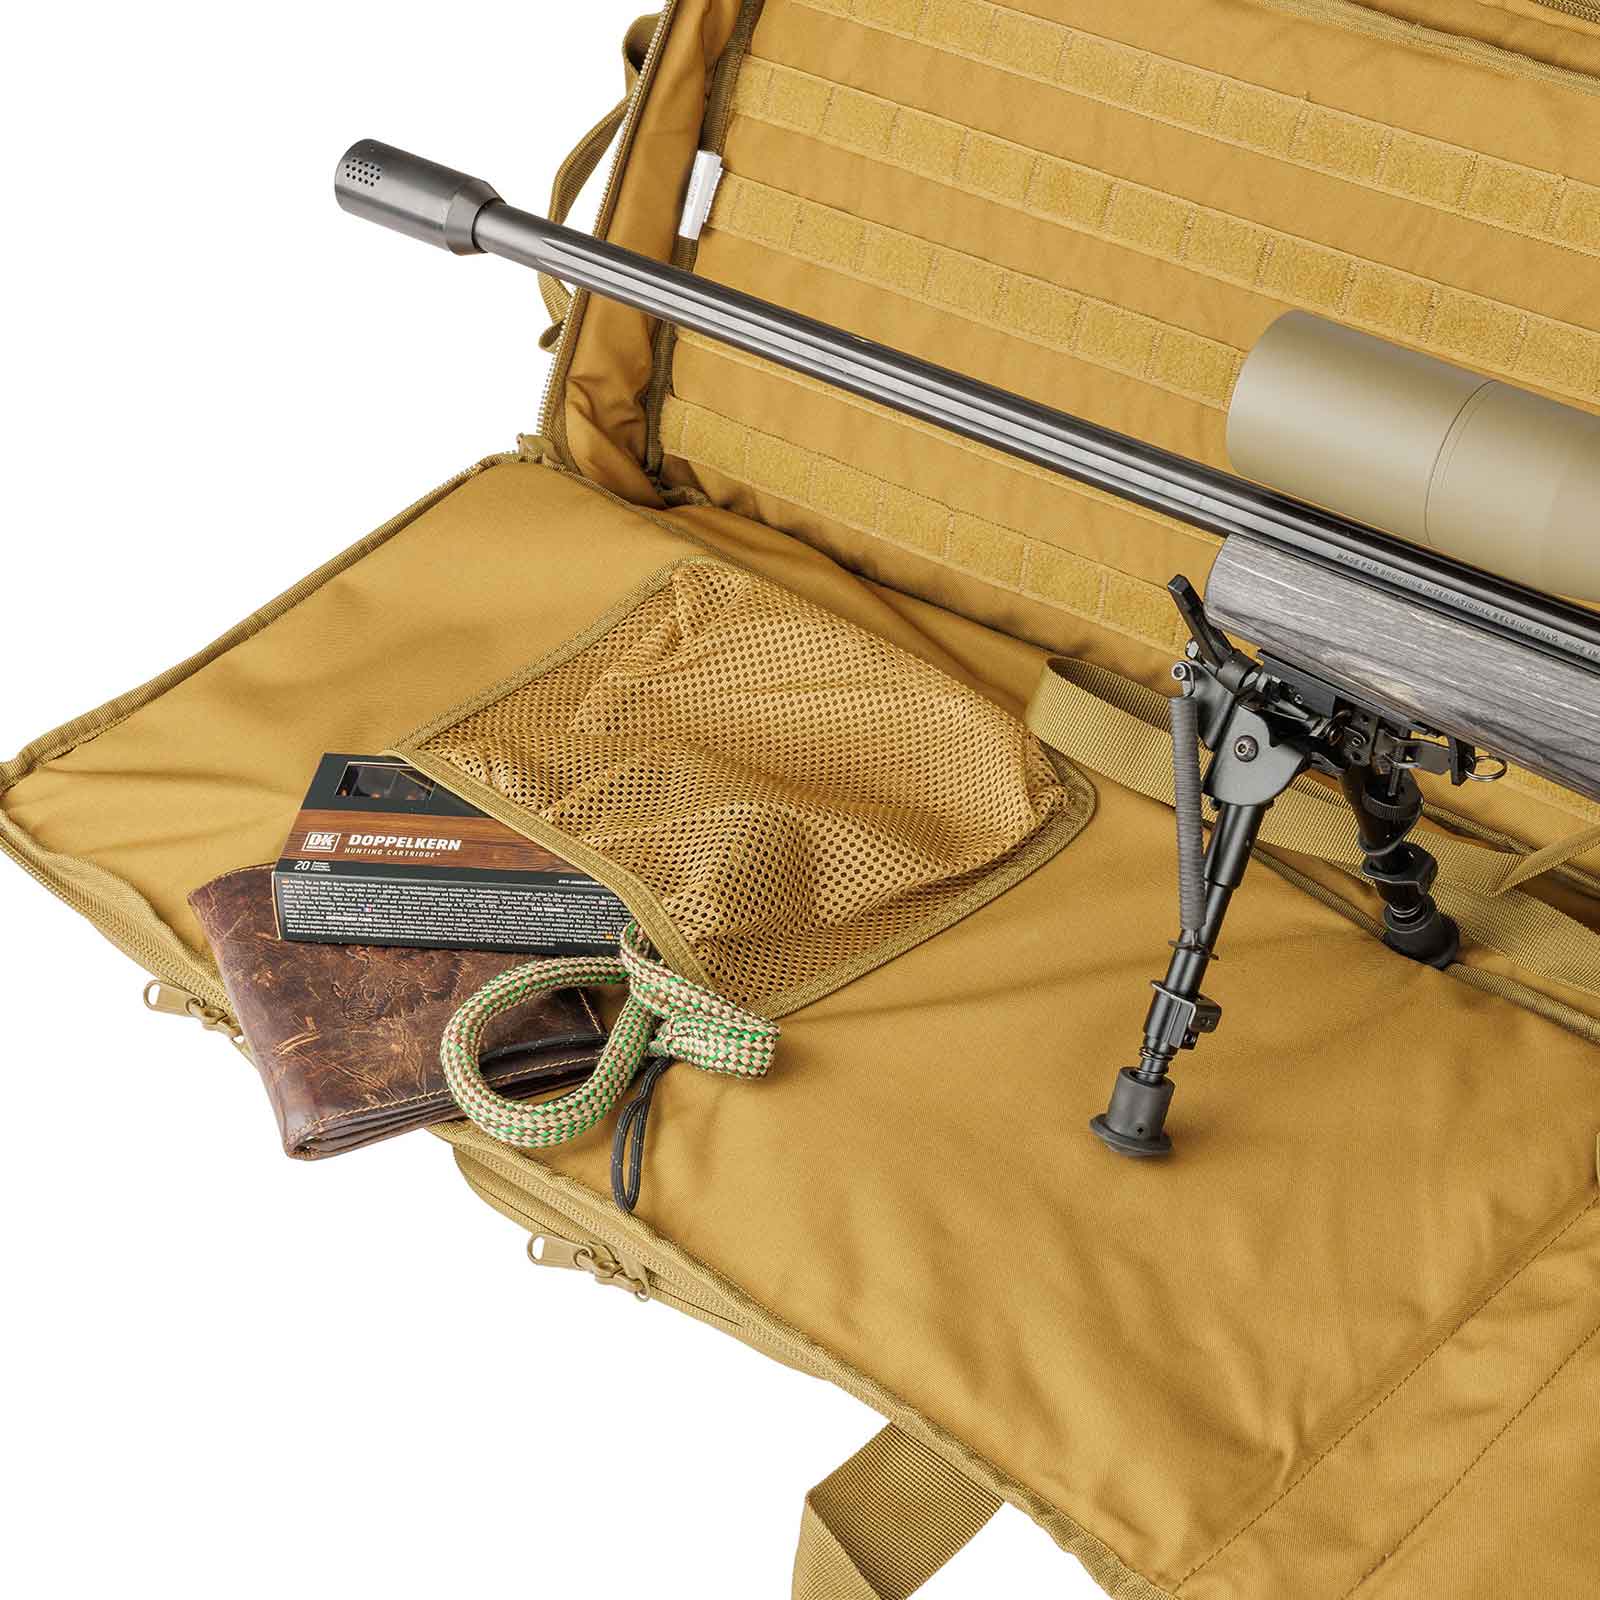 Bearproof Opti Drag Bag Weapon Pocket